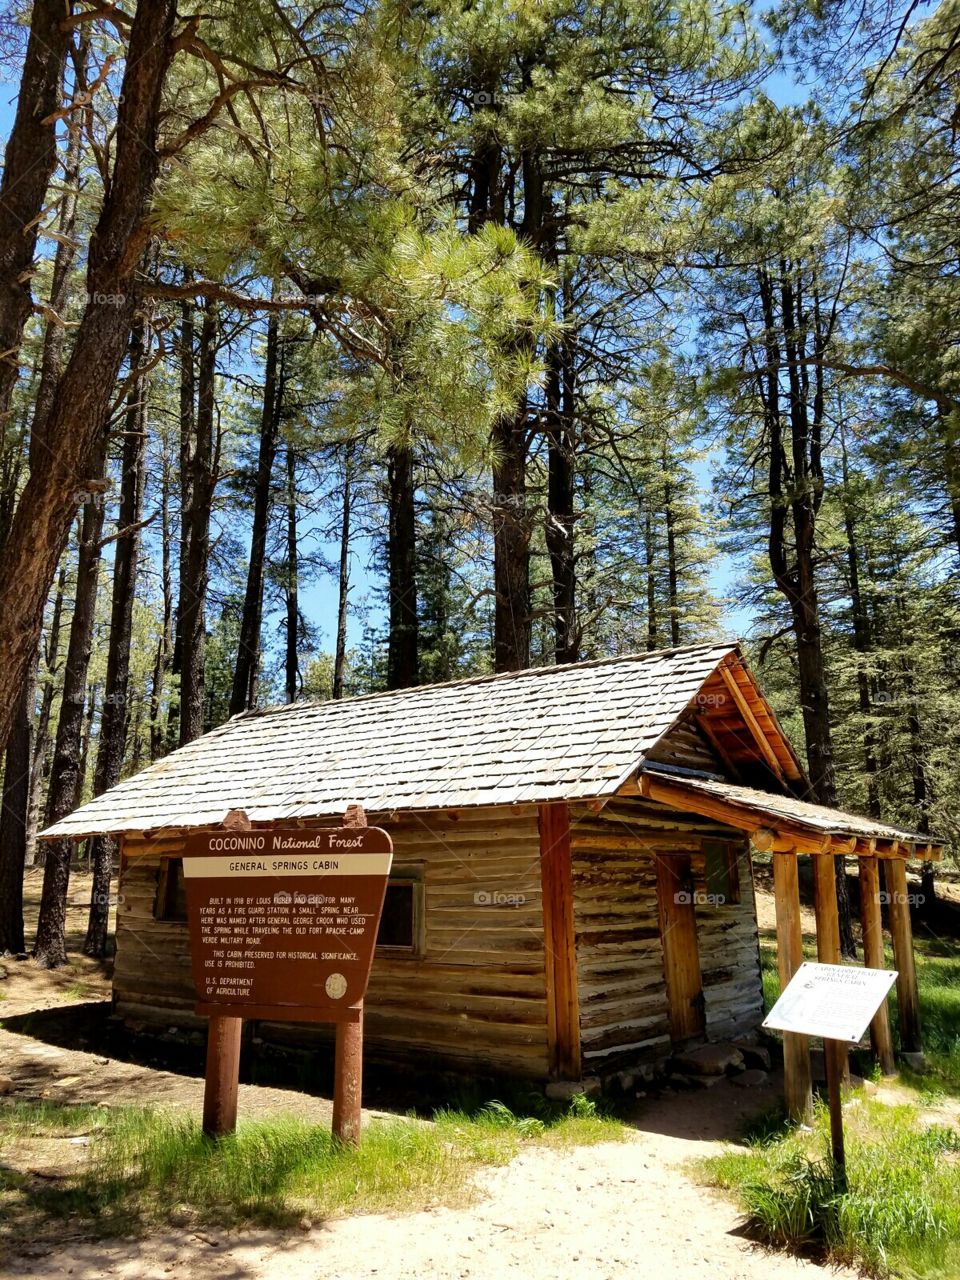 General Springs Cabin on the Mogollon Rim